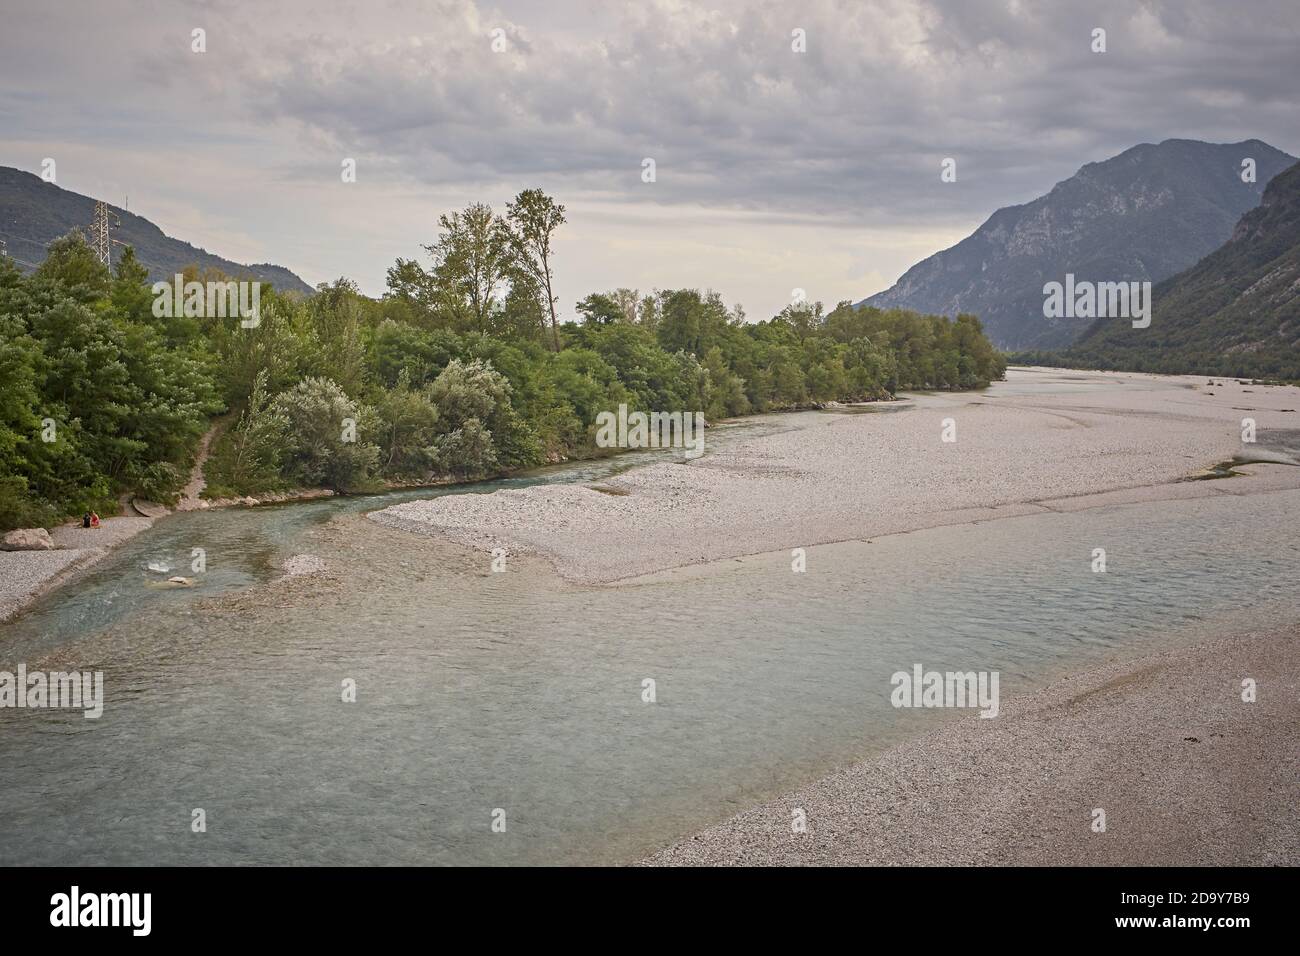 Friuli Venezia Giulia, Italy. The Tagliamento river near the little town of  Villa Santina. The Tagliamento river is considered as the last  morphologically intact river in the Alps. Its course has not